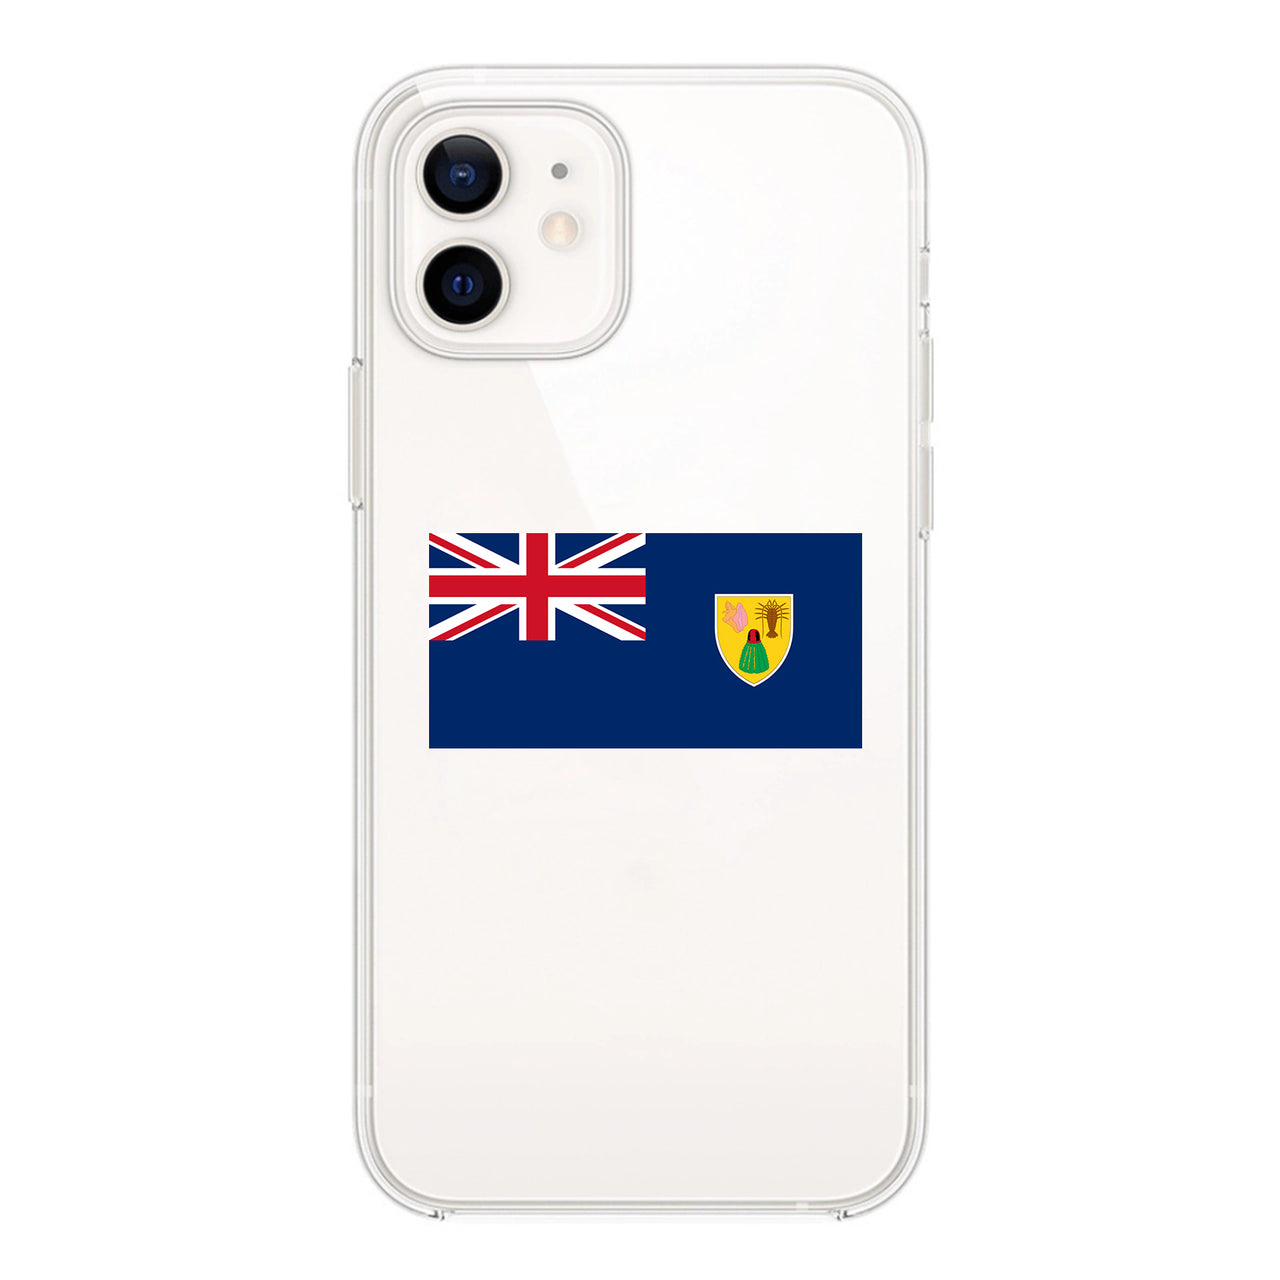 Turks and Caicos Islands Designed Transparent Silicone iPhone Cases